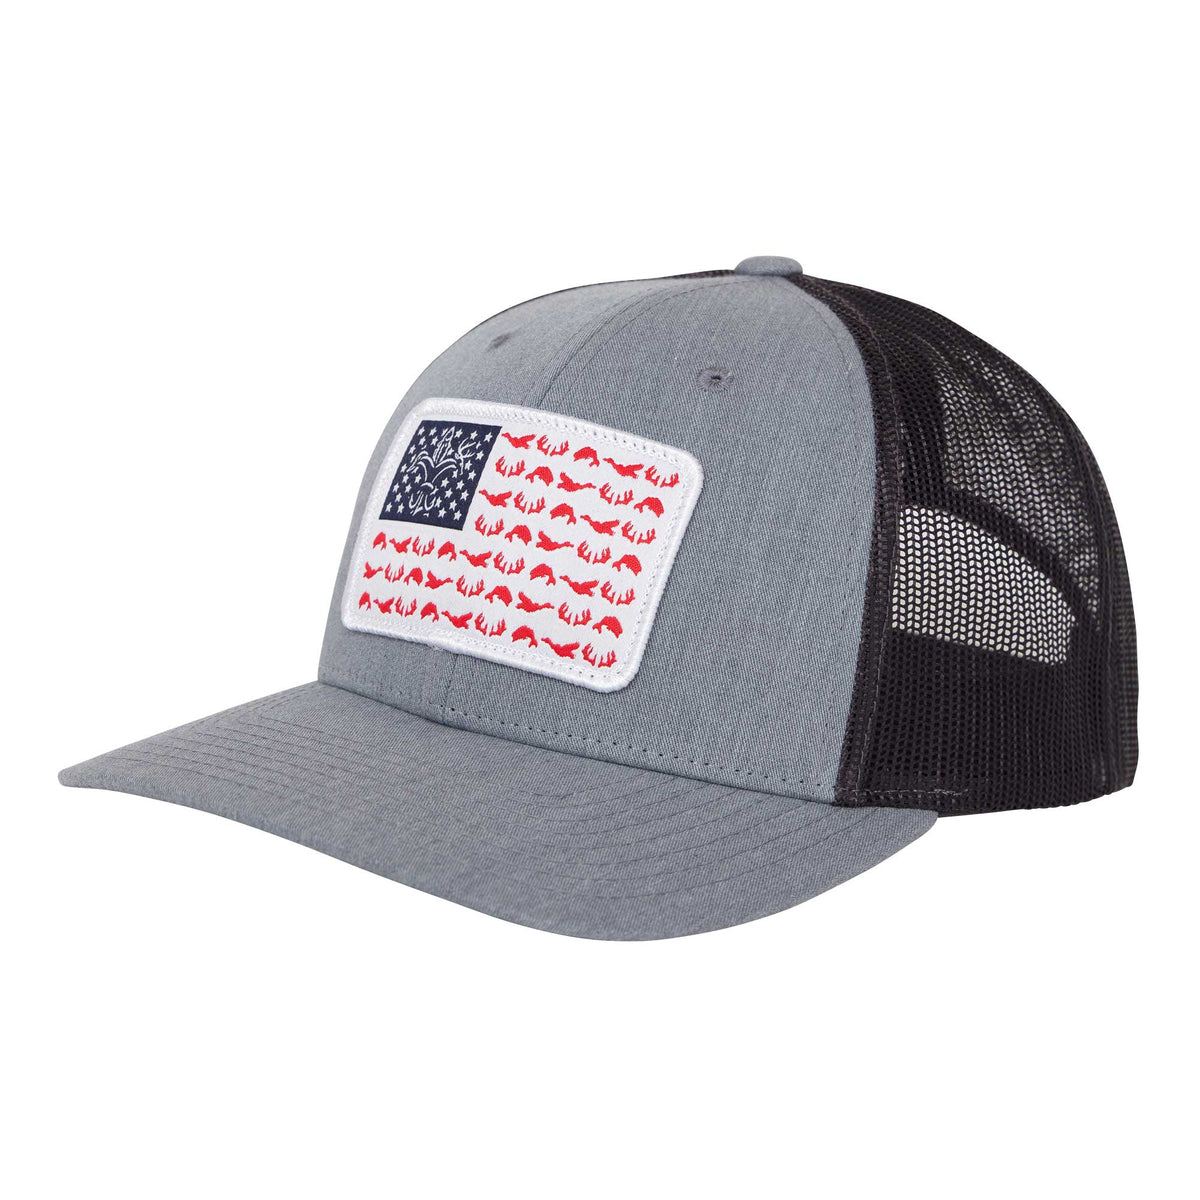 Gray American flag hat